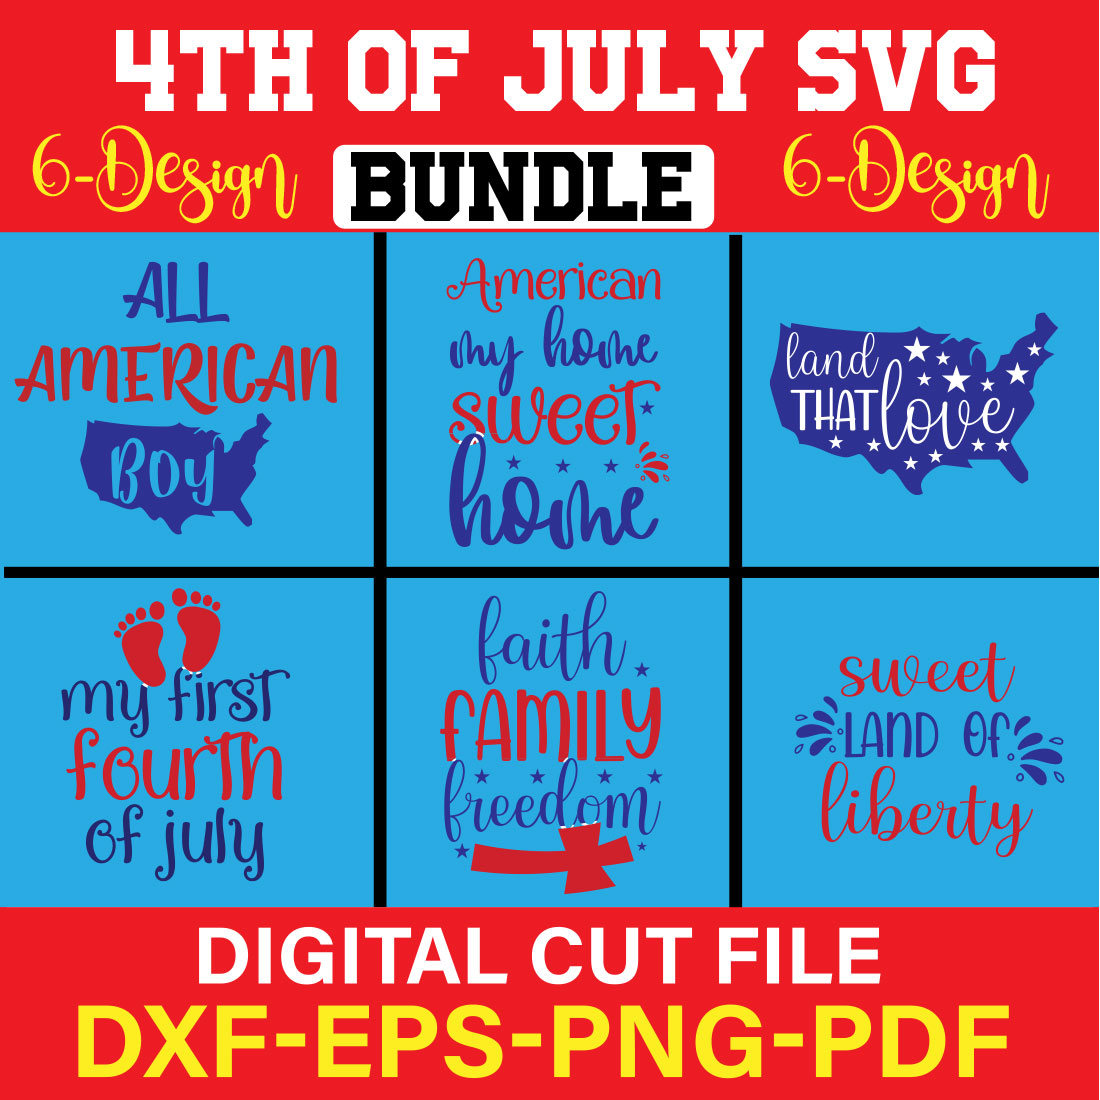 4th of July SVG Bundle Vol-2 cover image.